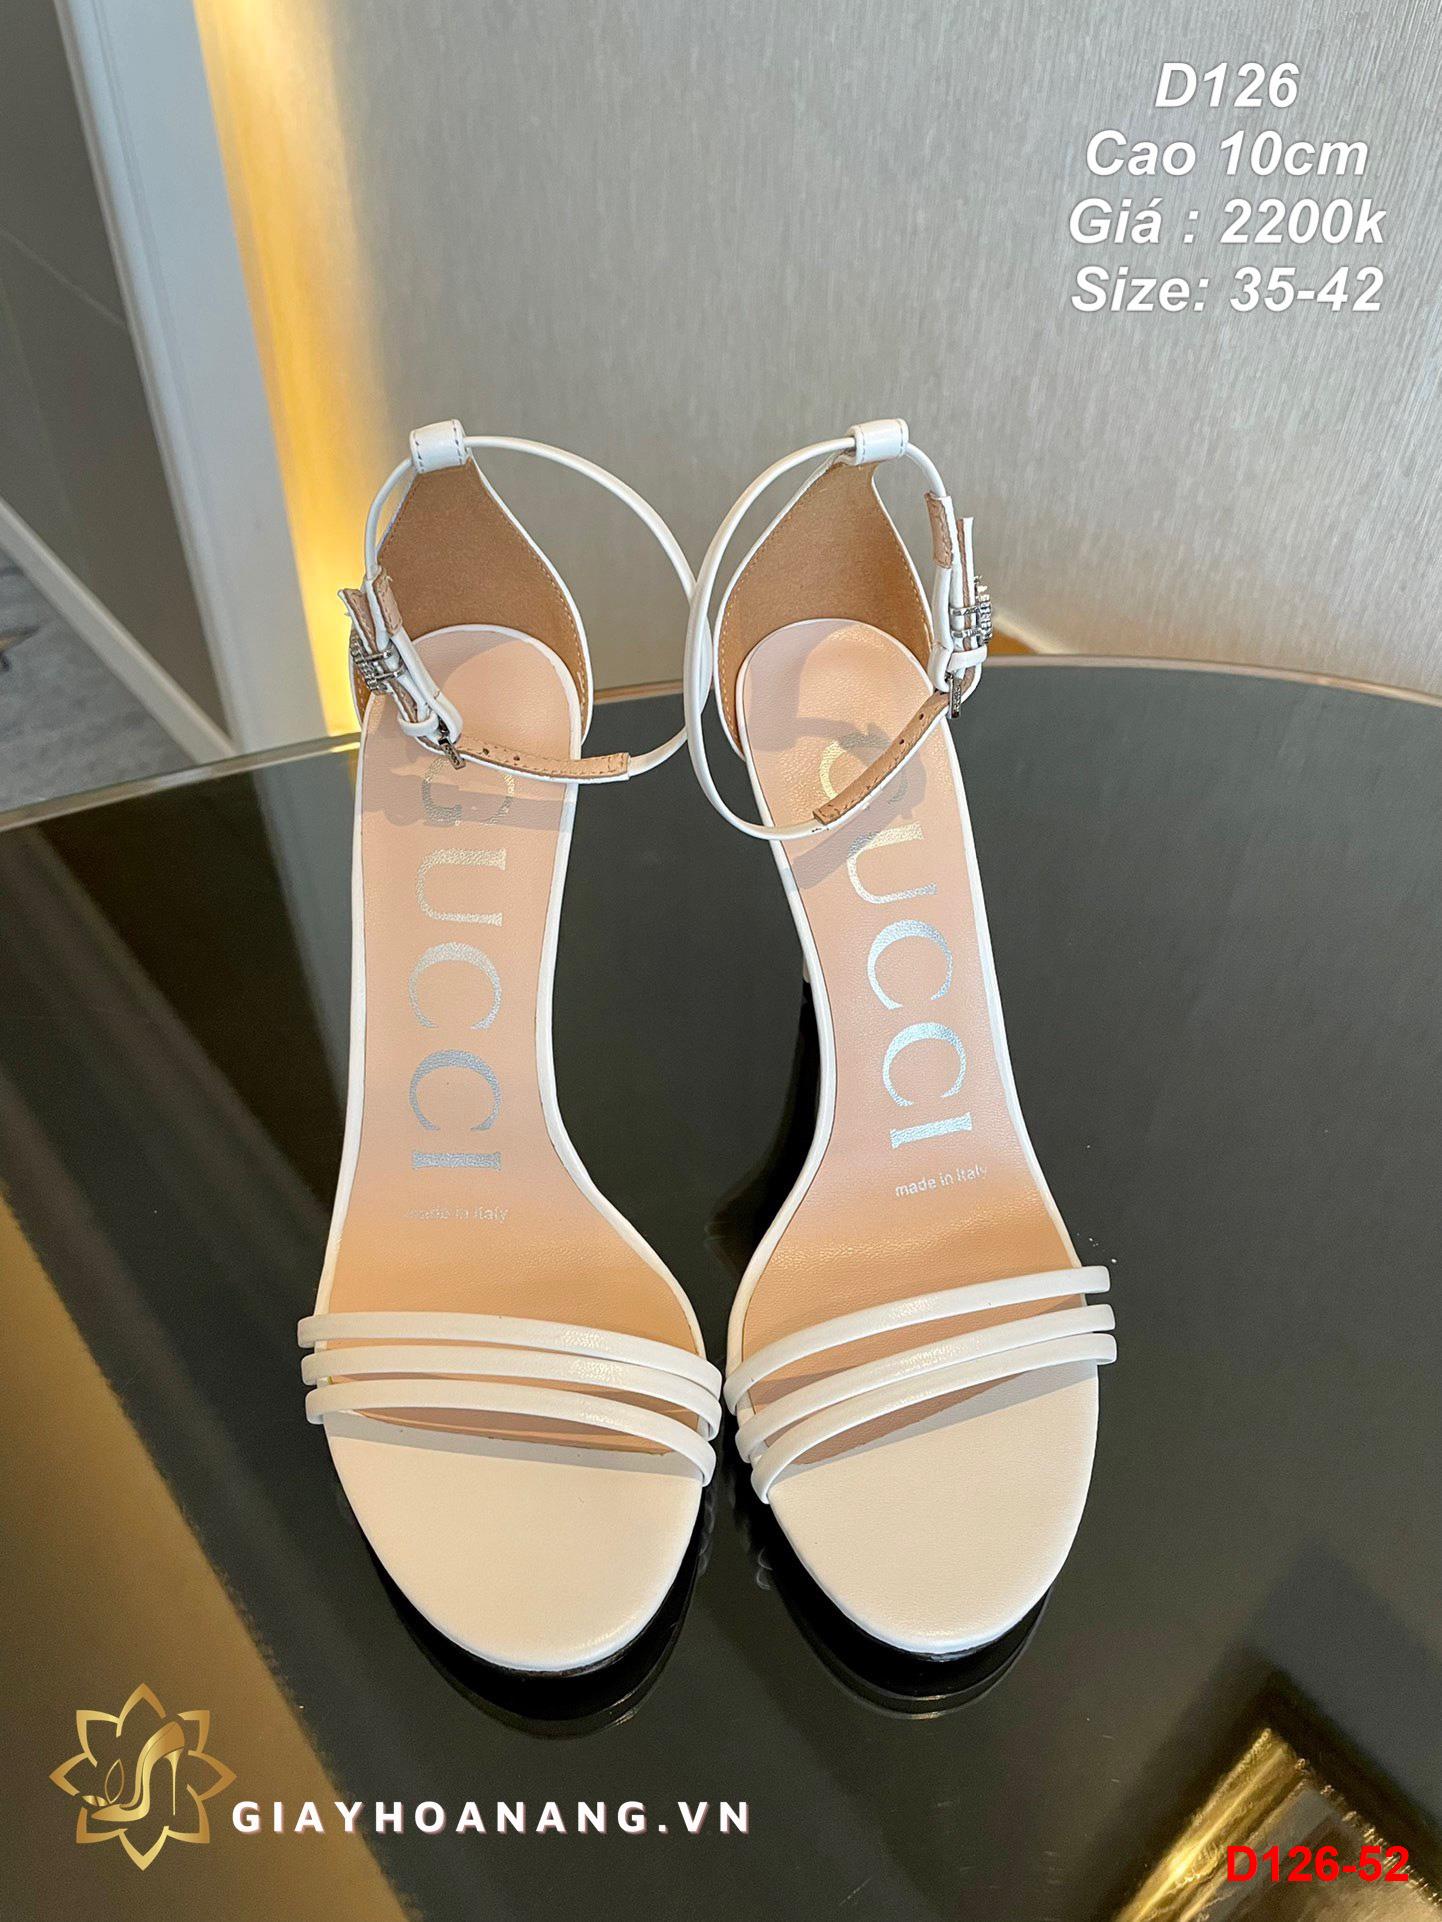 D126-52 Gucci sandal cao 10cm siêu cấp